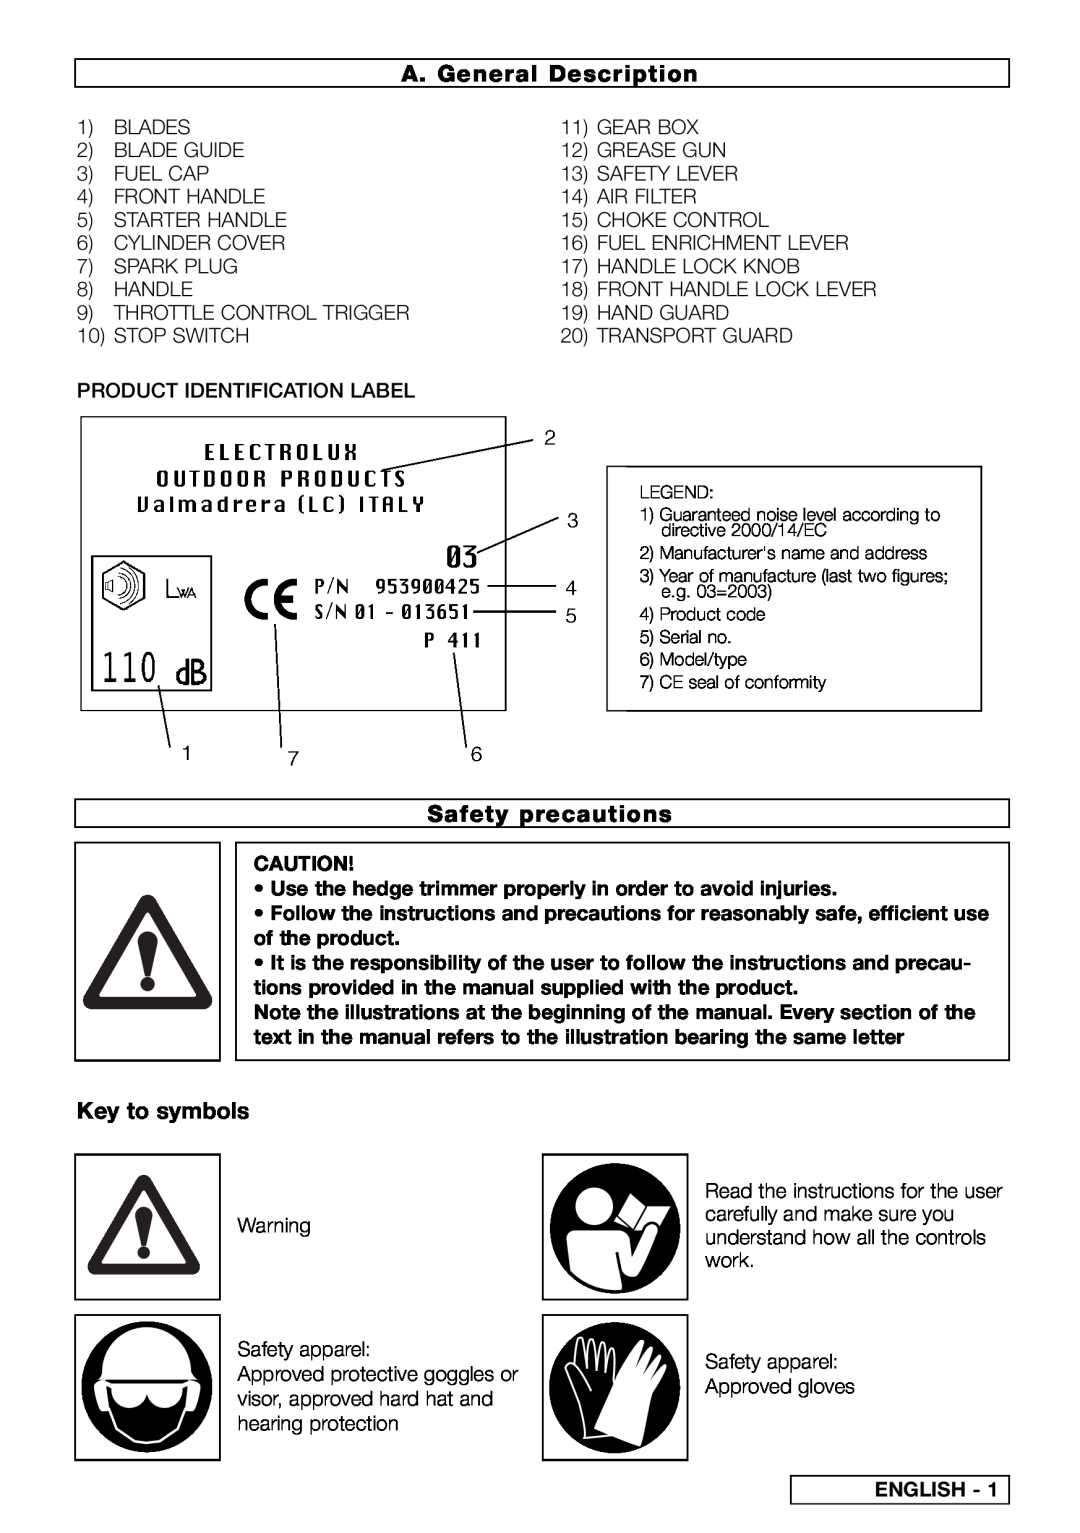 Electrolux HG 65OLI 65, TIVTIVOLI 50, PH 6HC 60, PH 611 A. General Description, Safety precautions, Key to symbols, English 